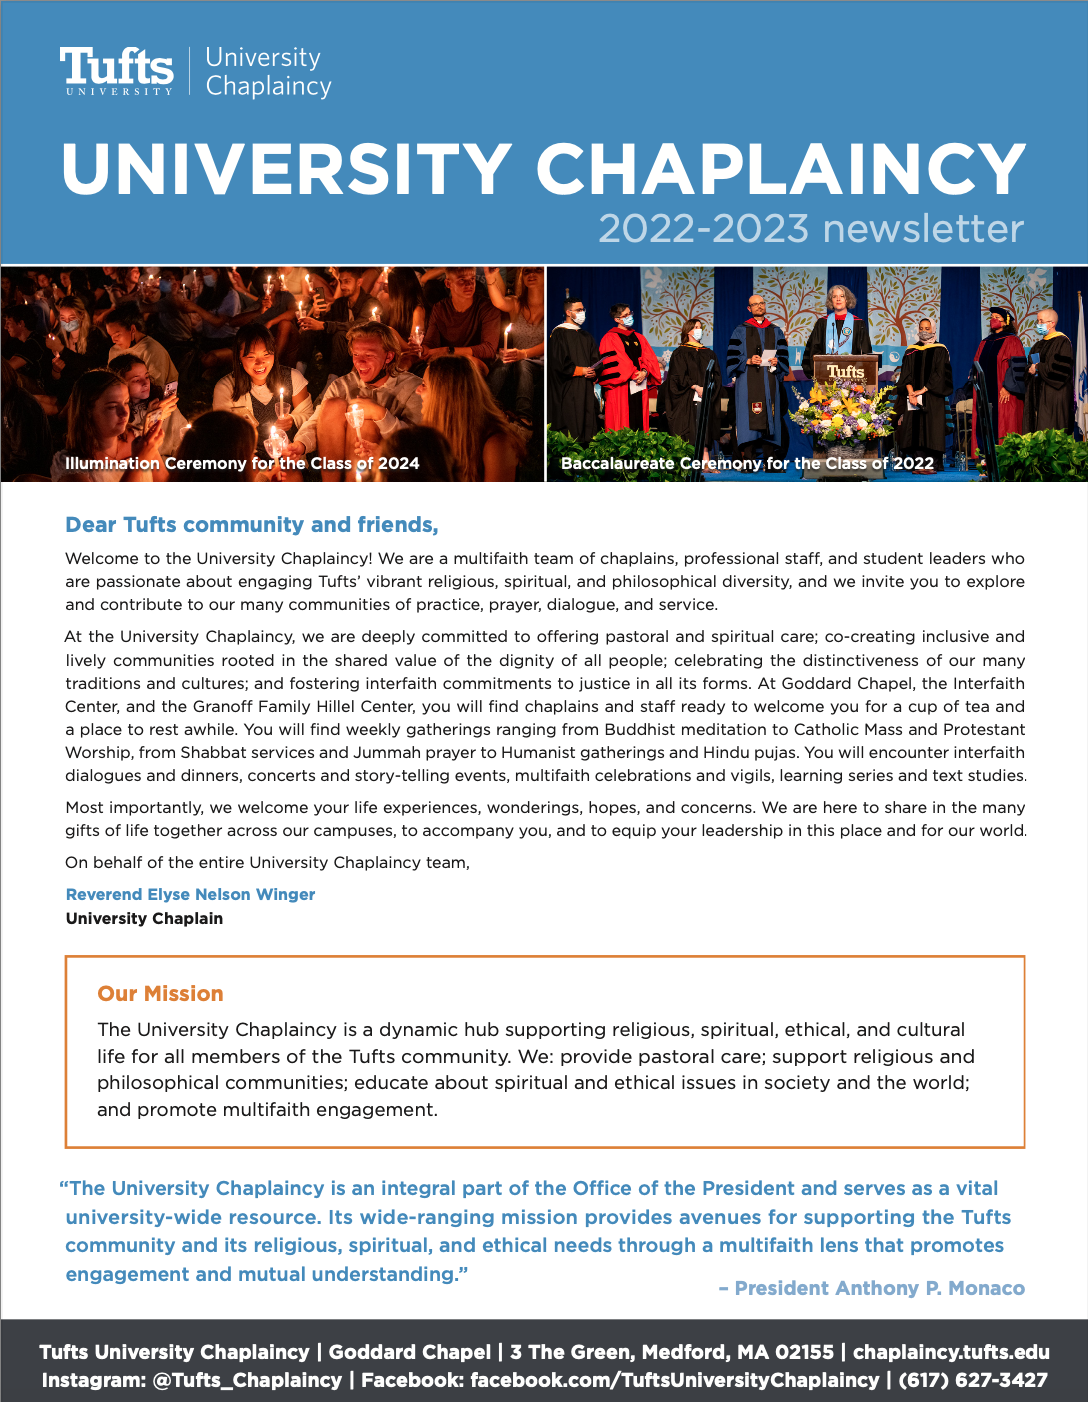 University Chaplaincy page